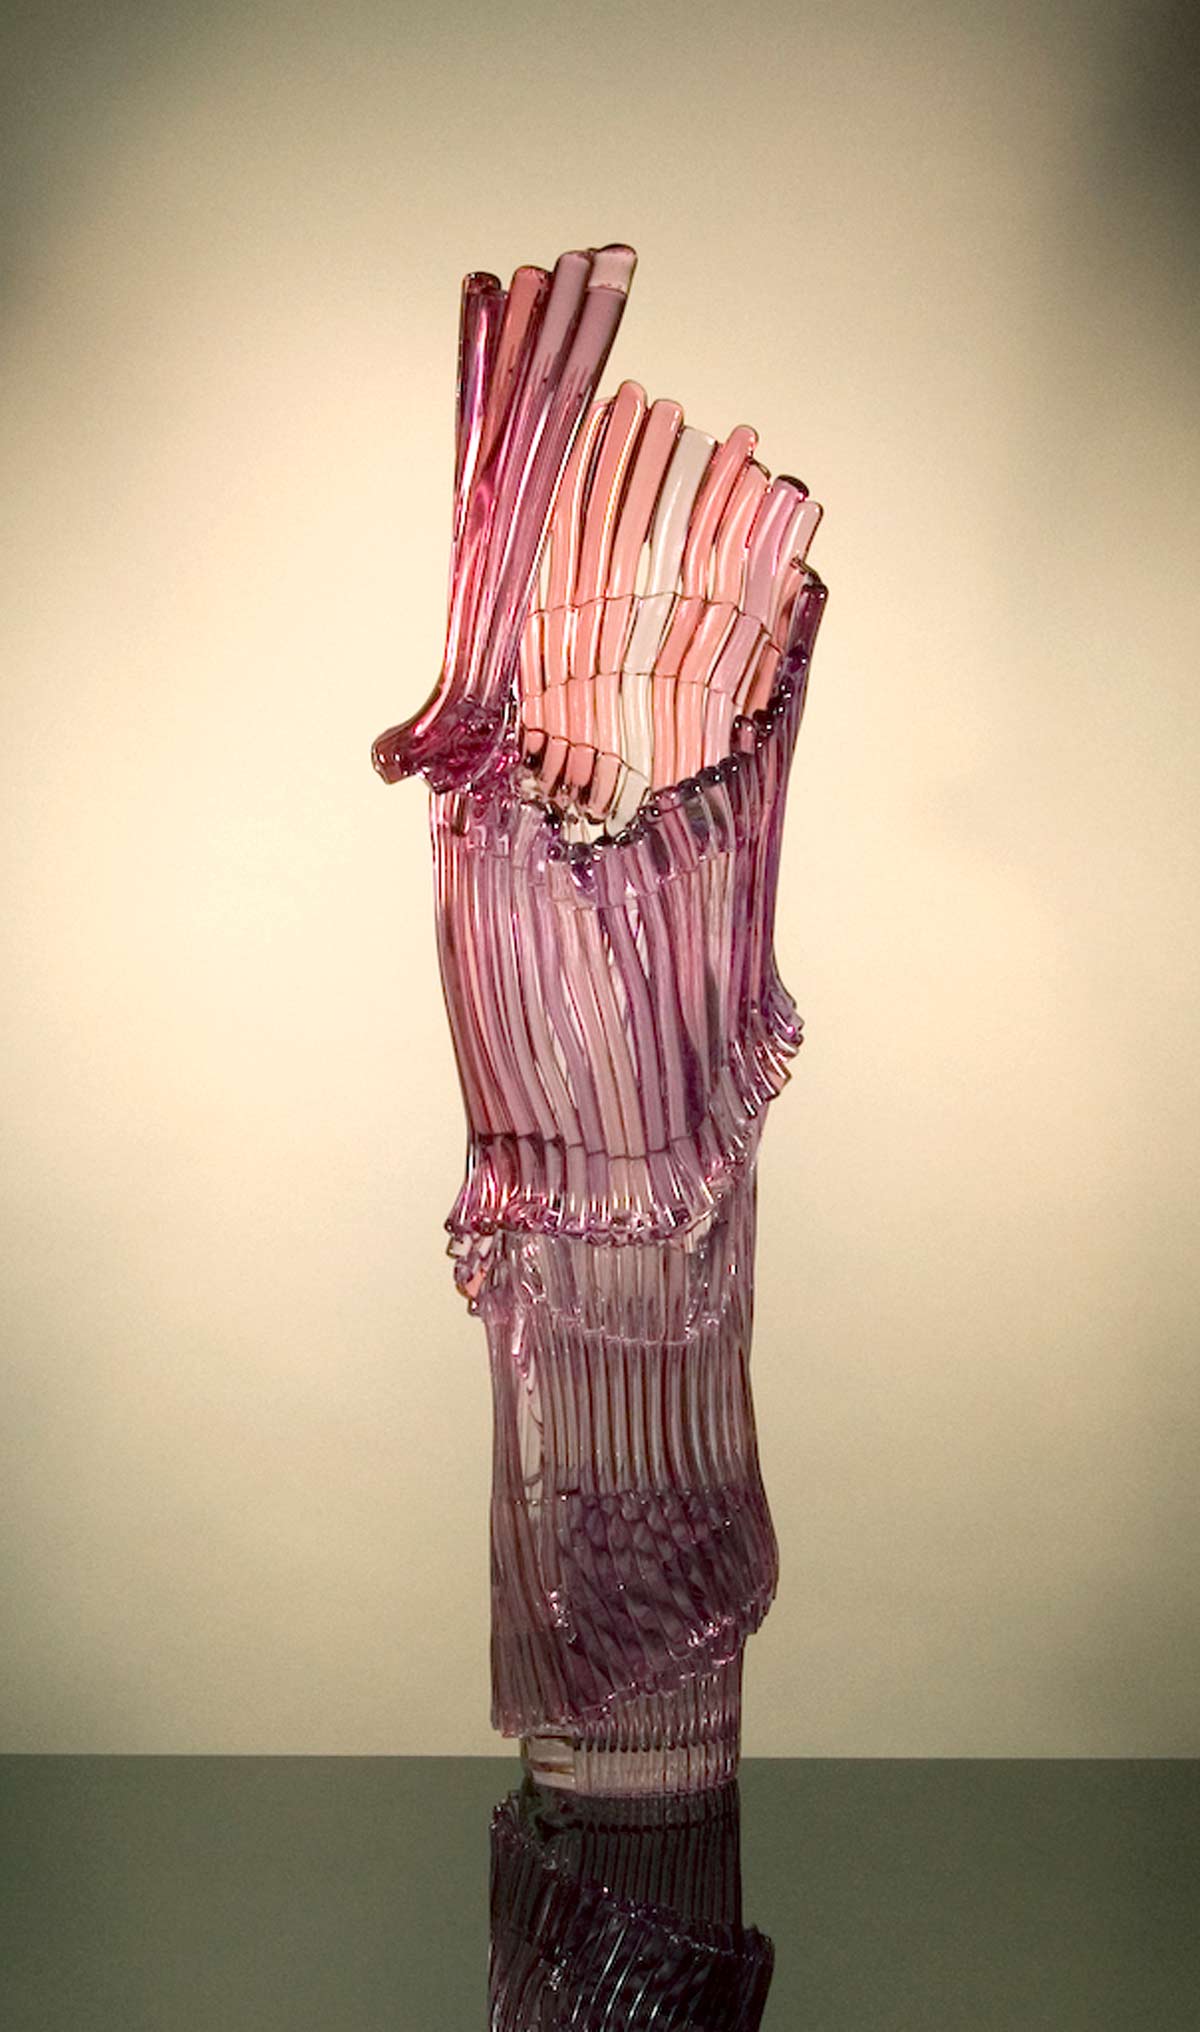 Richard-Royal-Shelter-series-s13-04-purple-pink-glass-sculpture